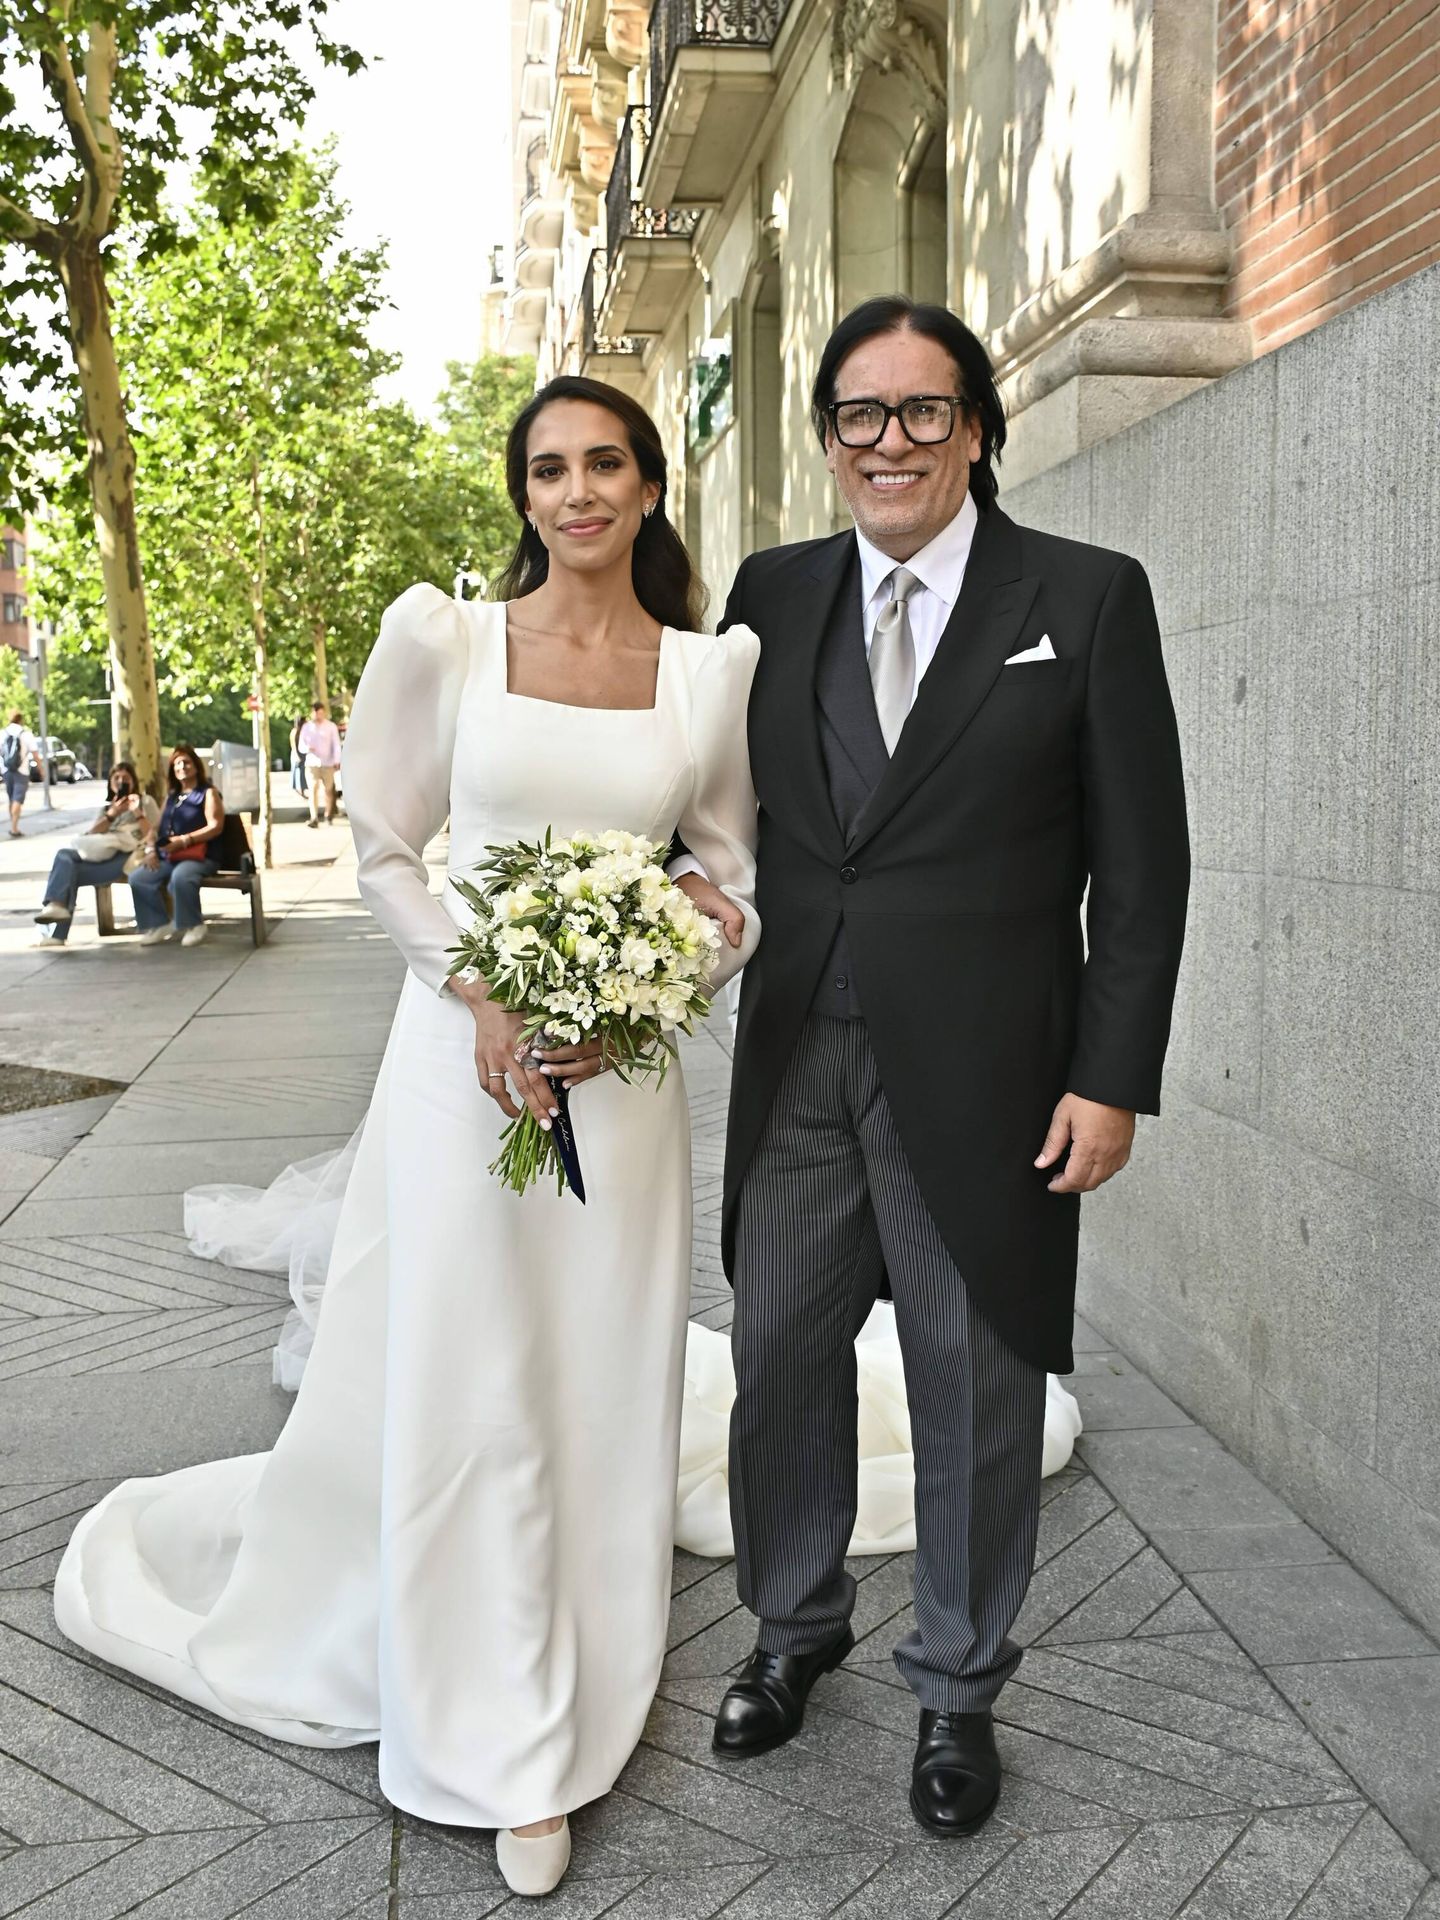 Carolina Trillo, hija de Eugenia Salazar, llegando a la boda junto a su padre. (Cordon Press)